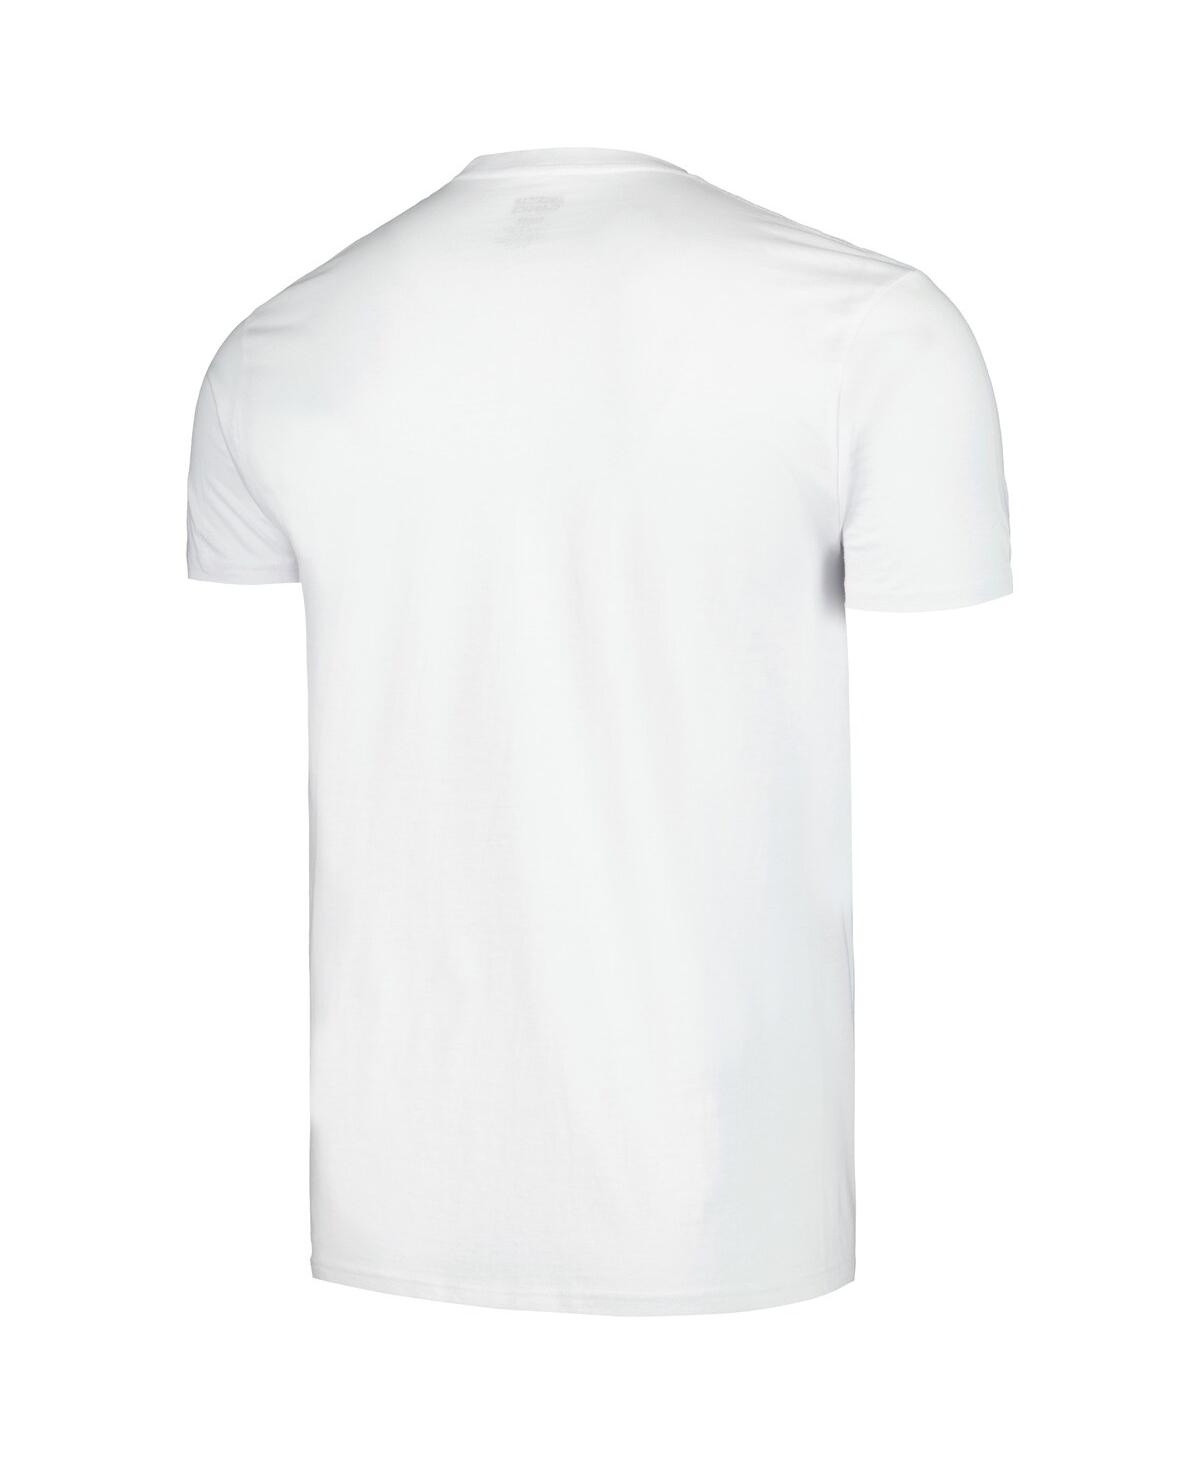 Shop American Classics Men's White John Wayne Black & White Photo Graphic T-shirt